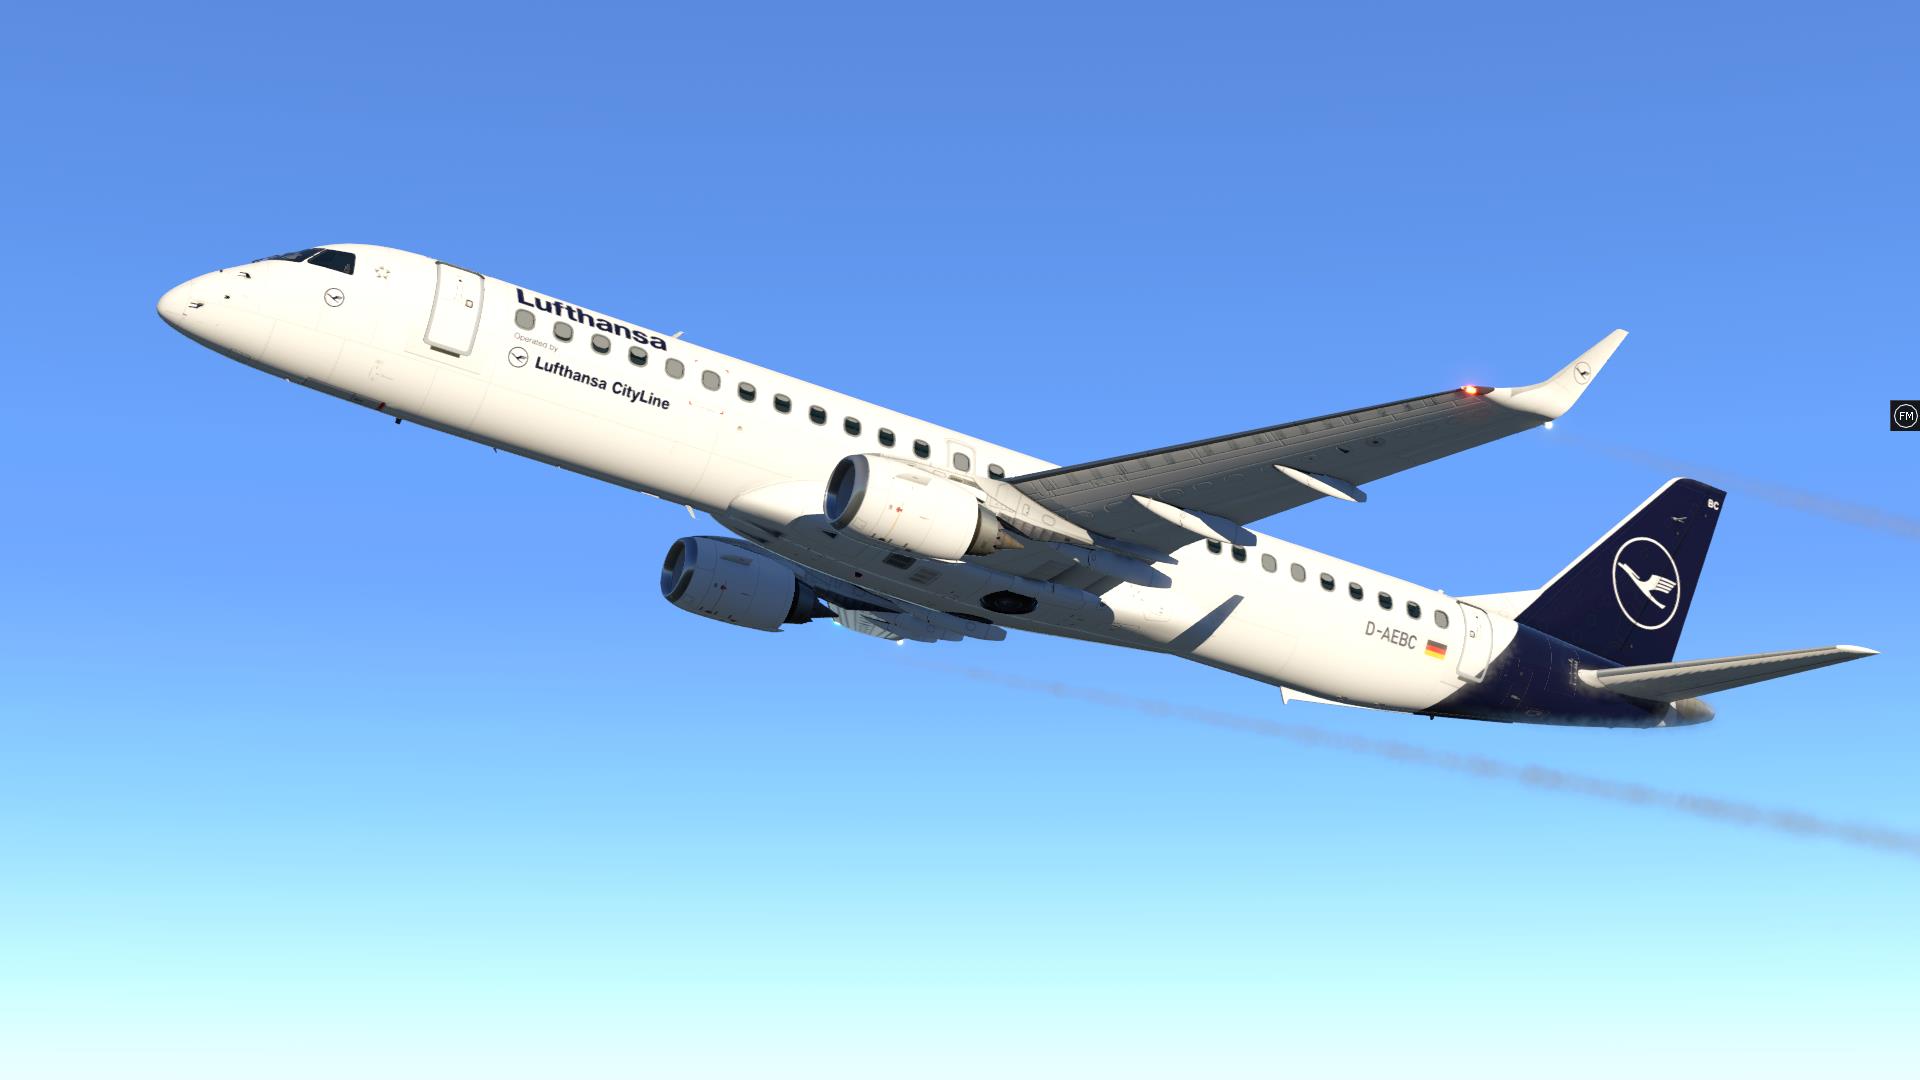 Lufthansa Cityline